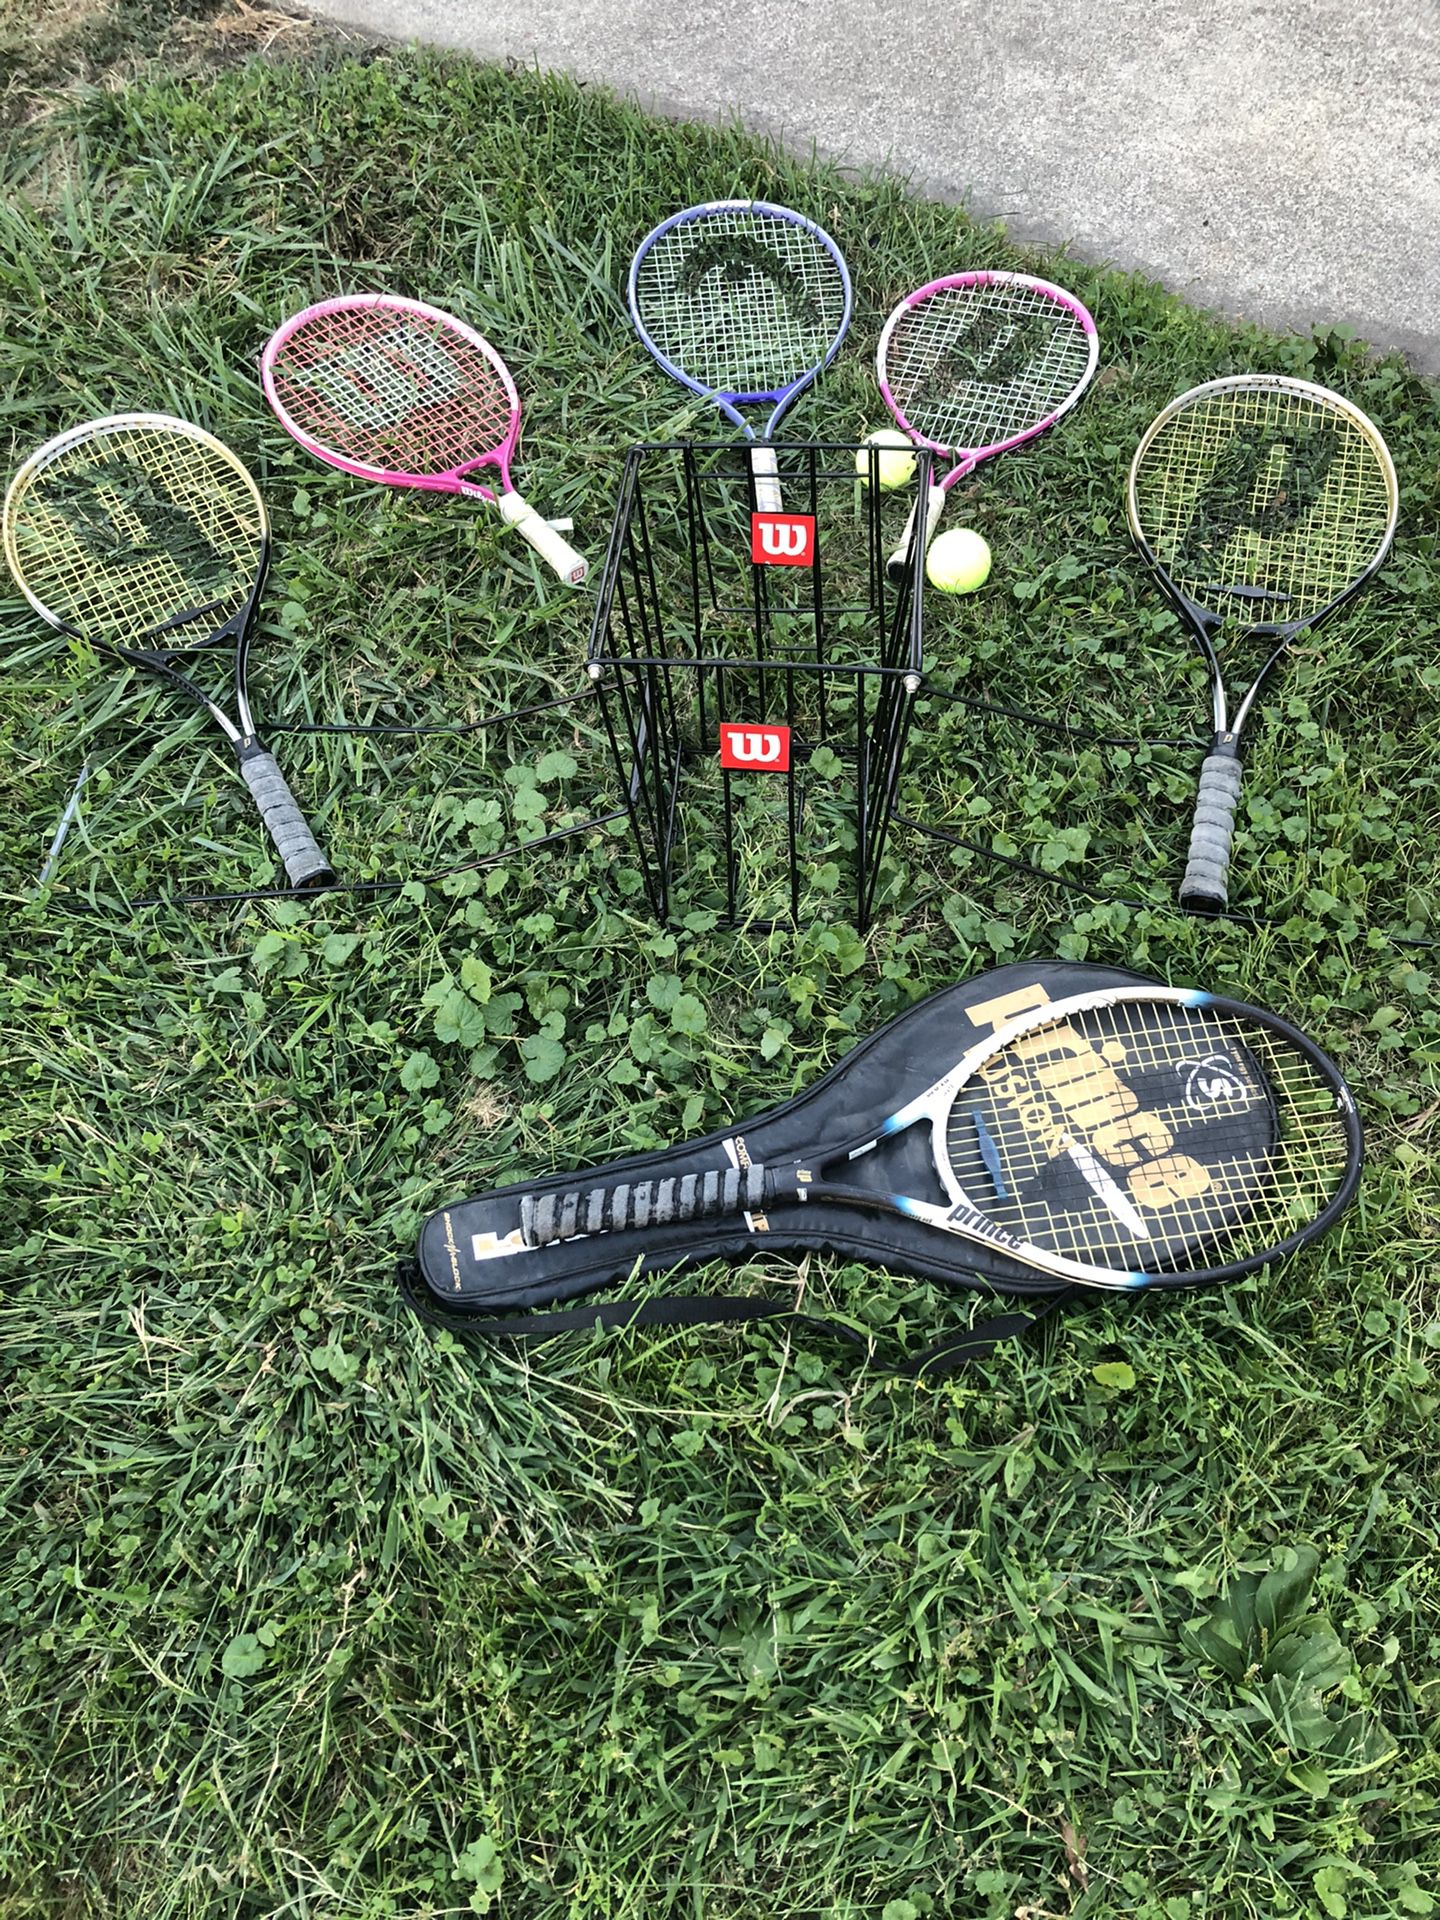 Tennis rackets and ball holder